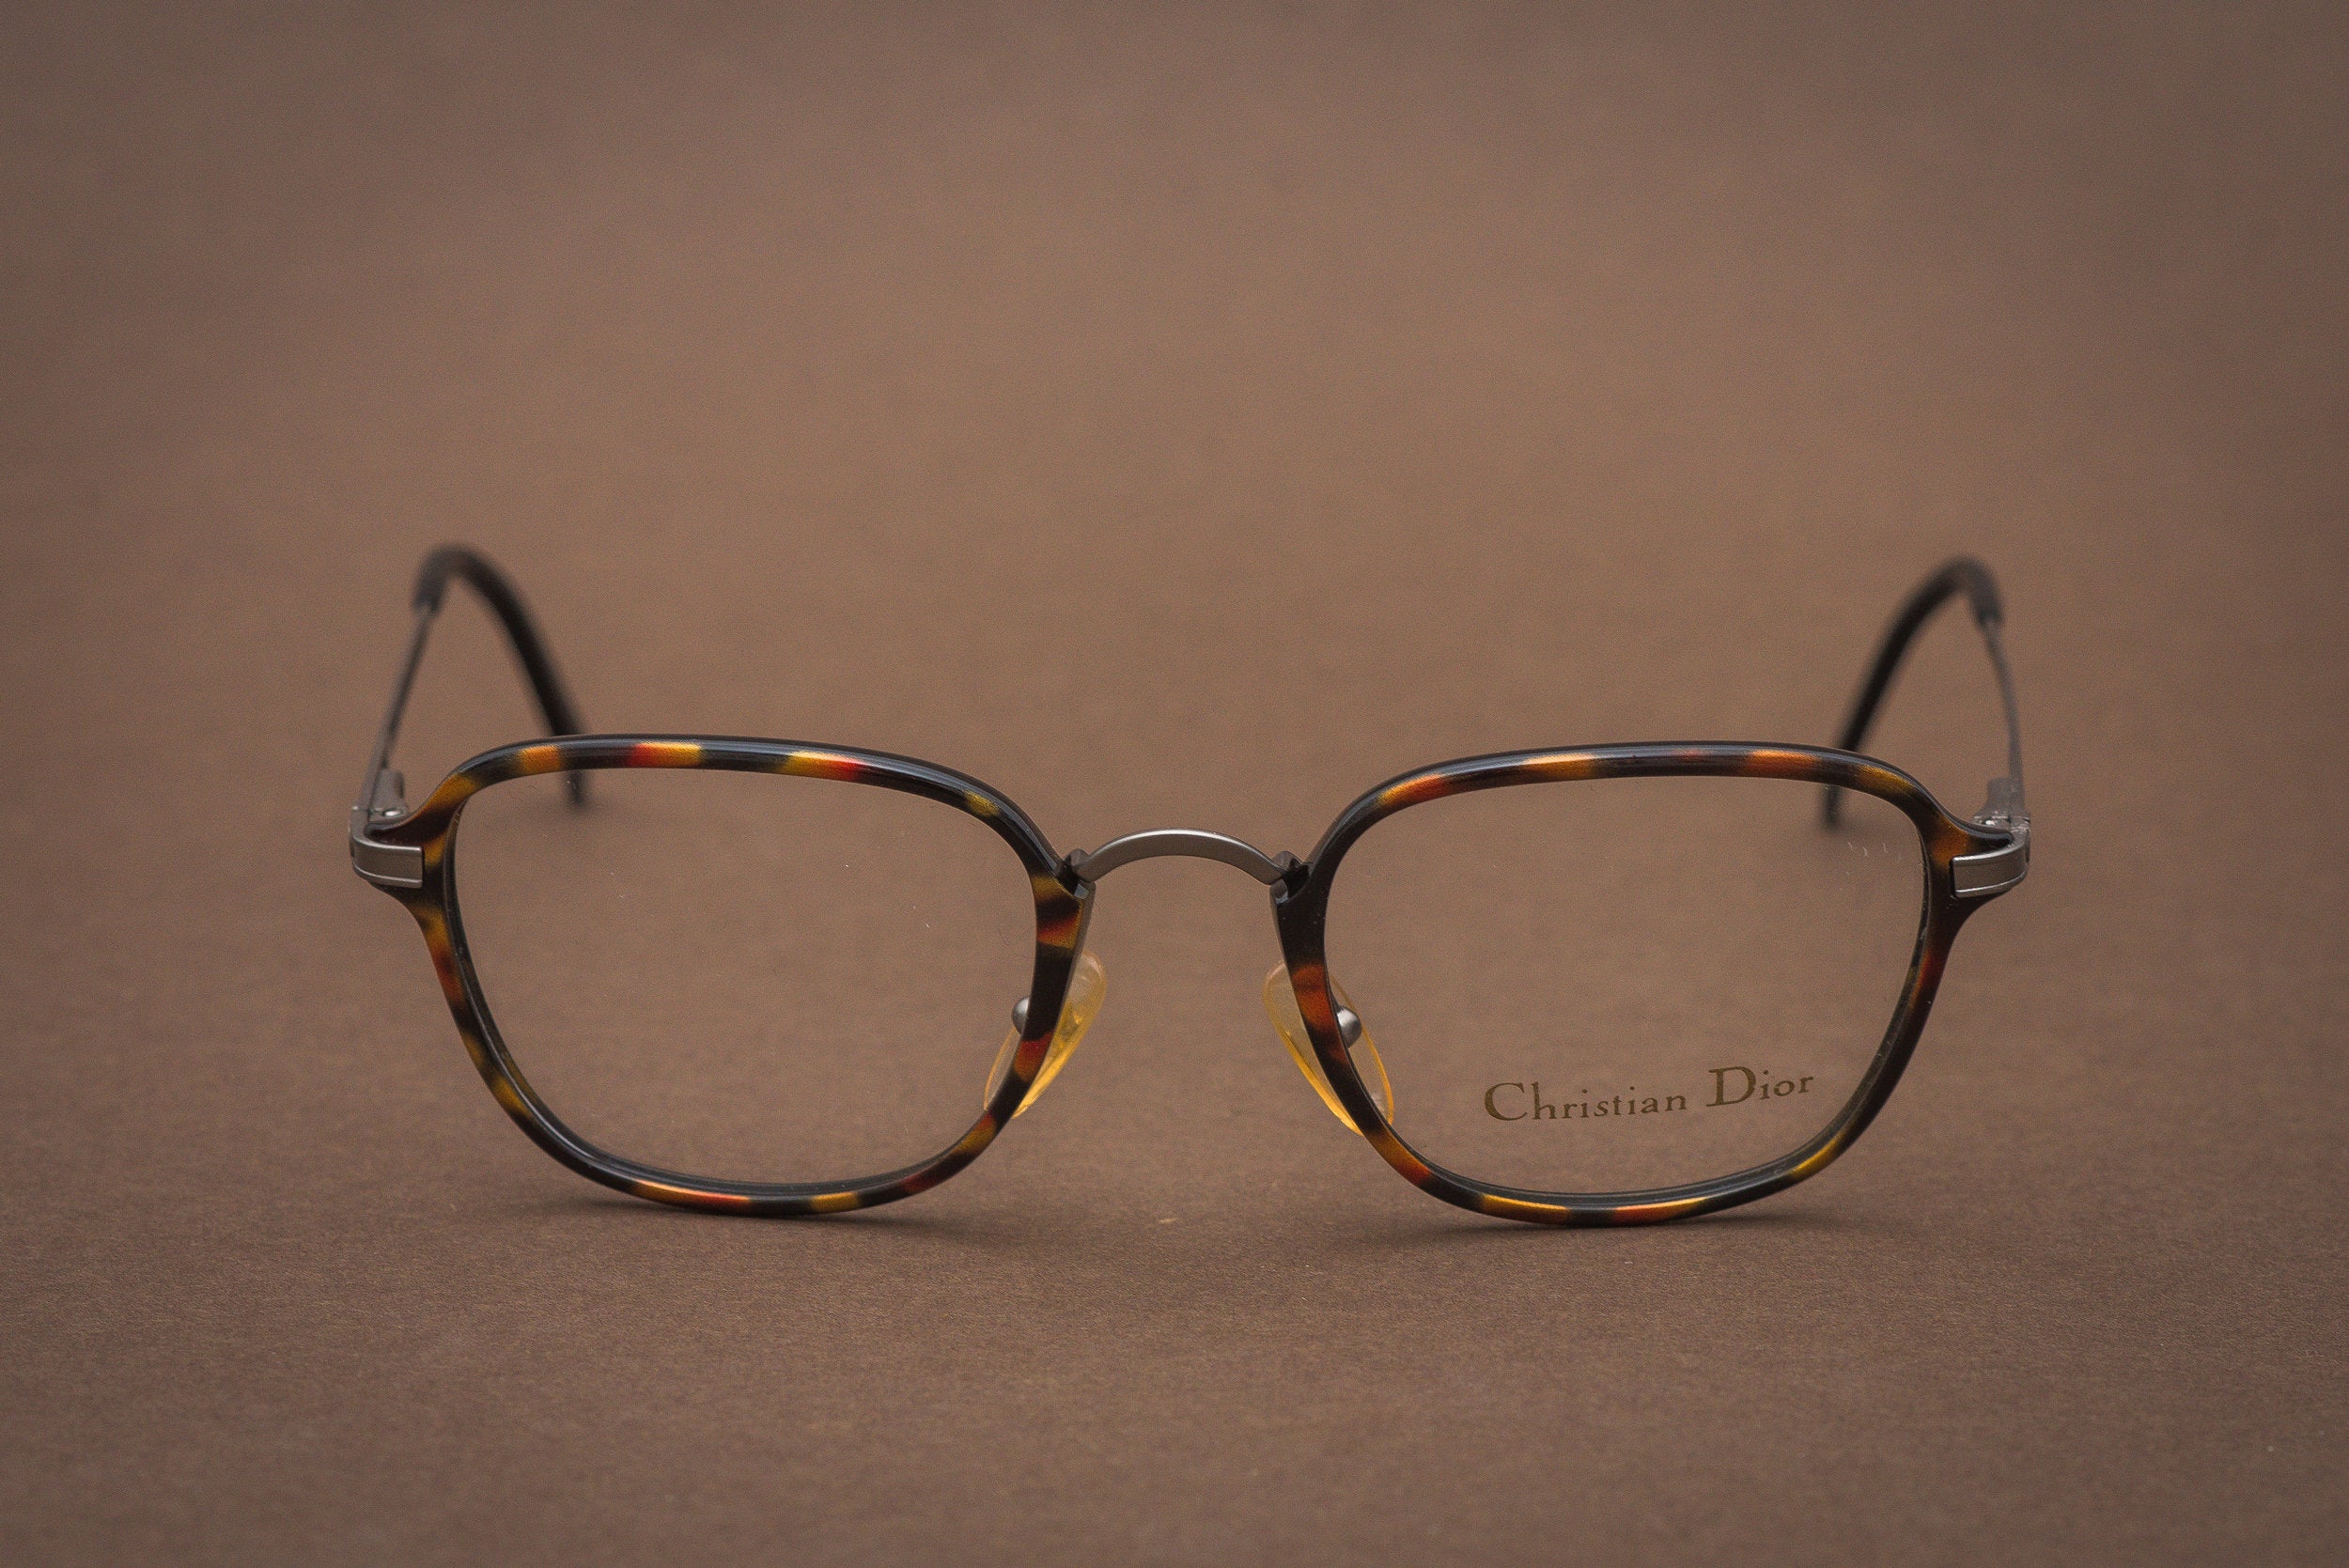 Christian Dior 2898 glasses